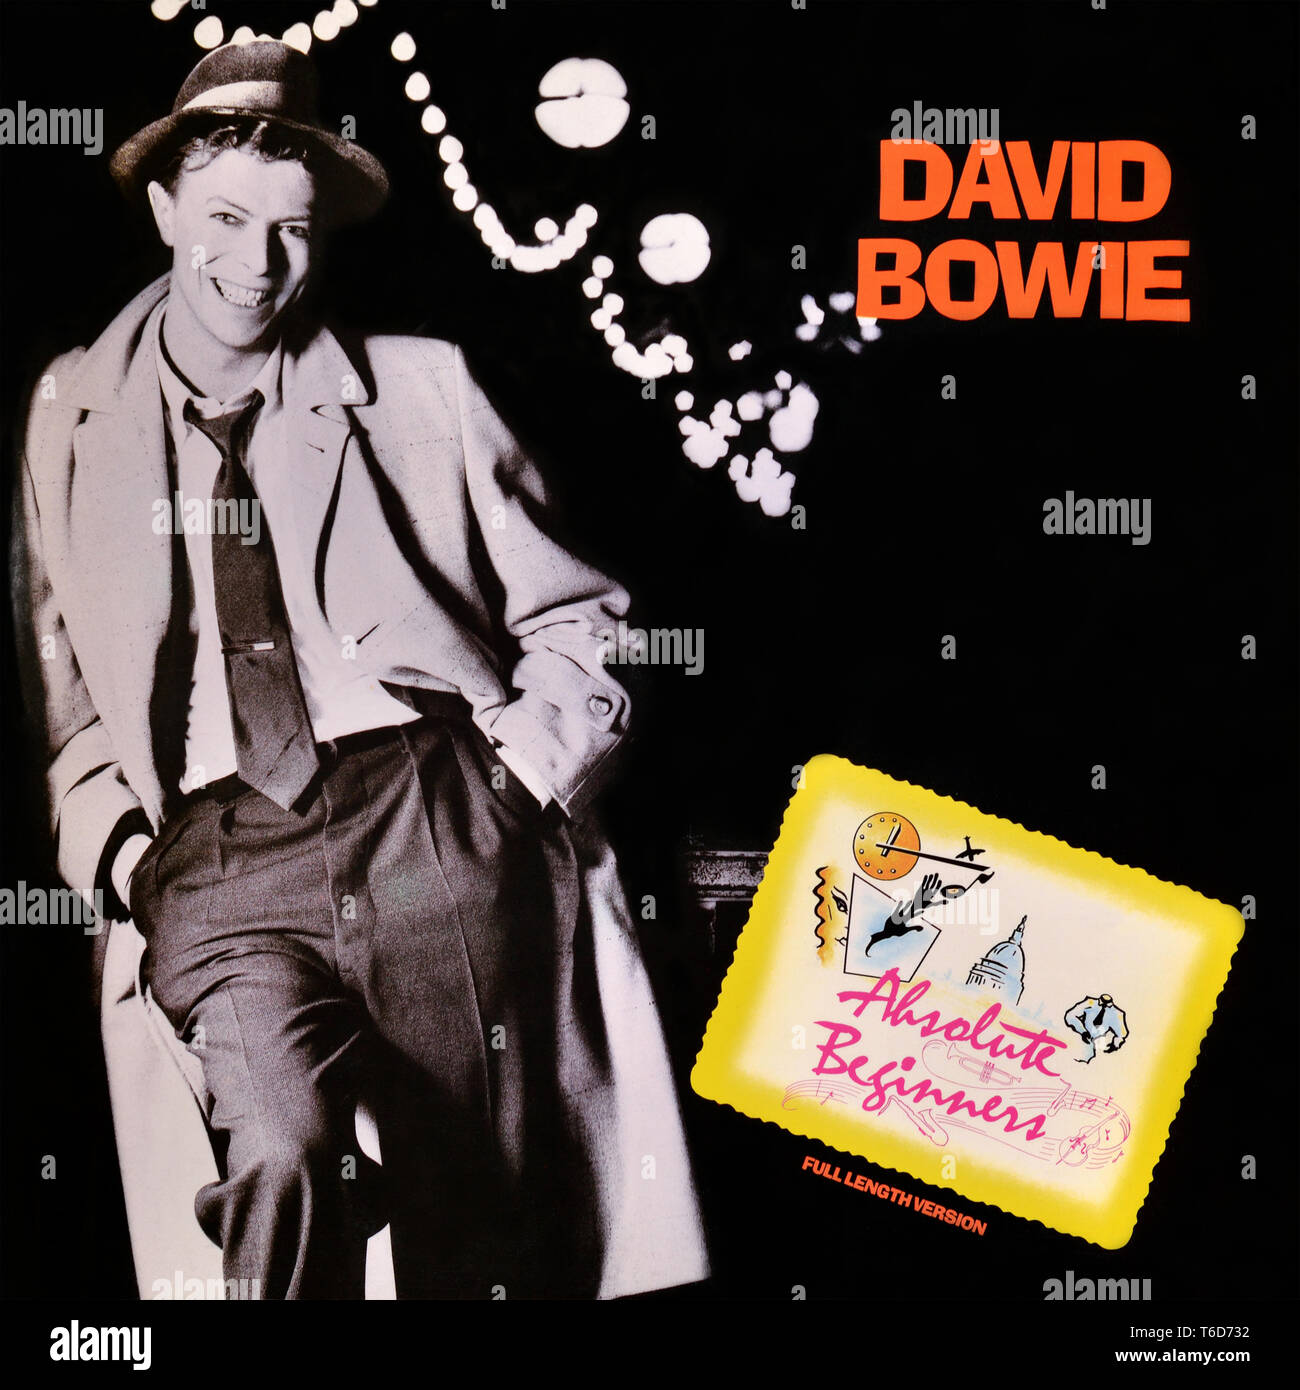 David Bowie - original Vinyl Album Cover - Absolute Beginners - 1986 Stockfoto